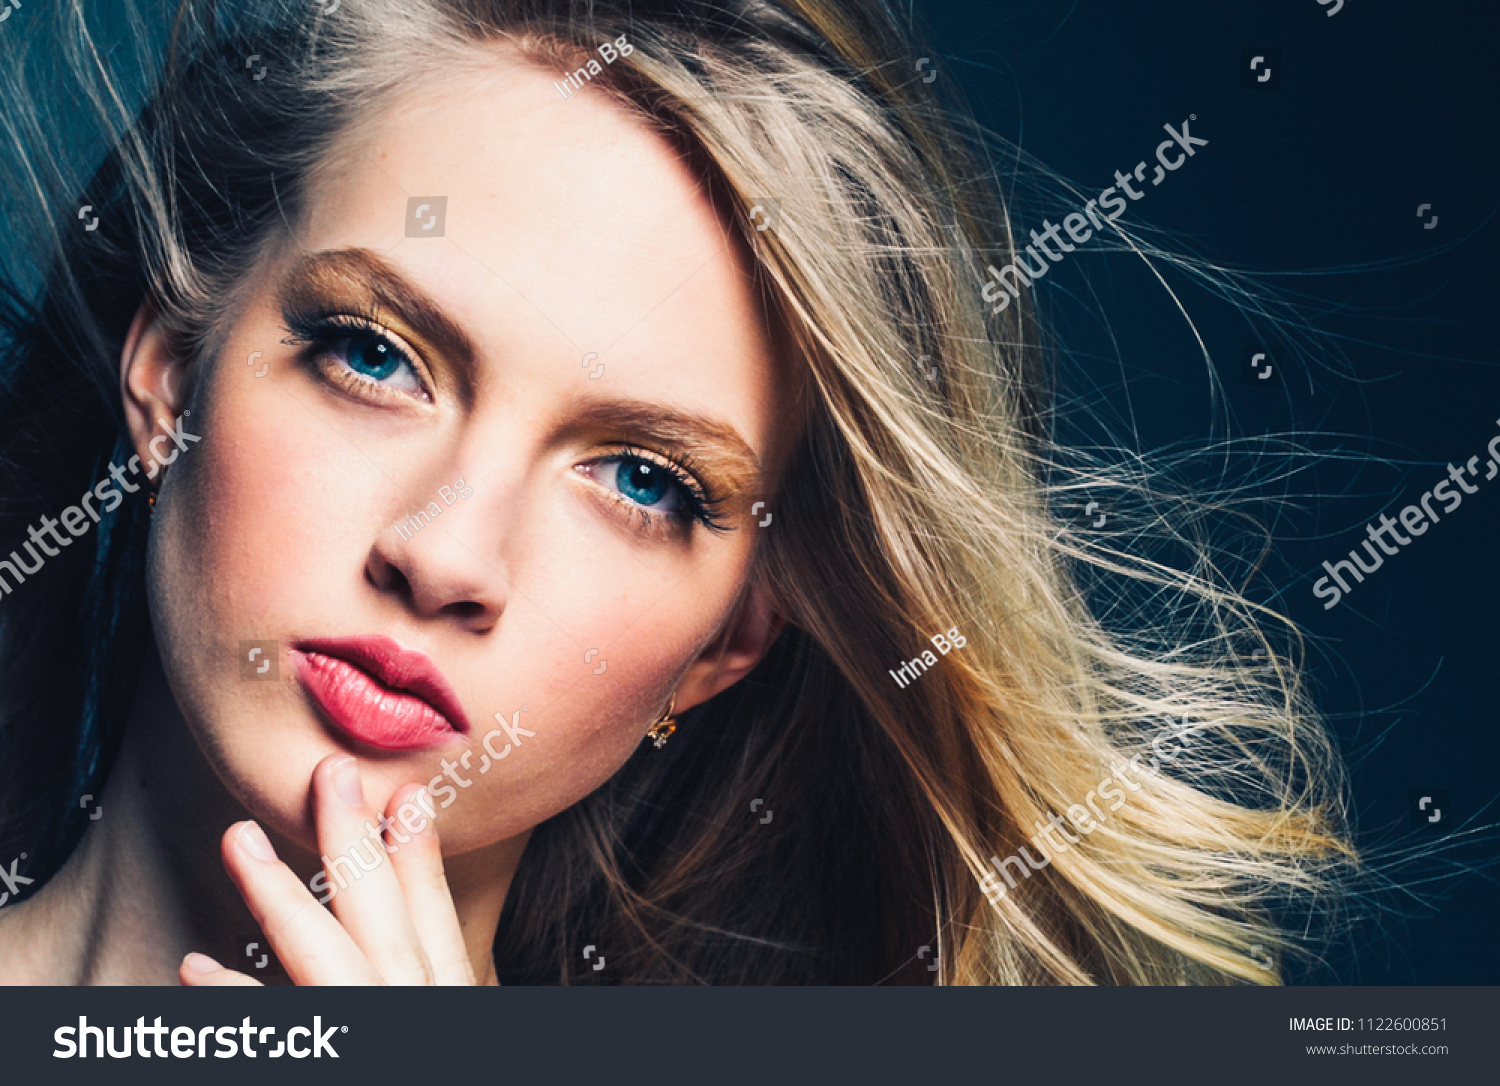 Blonde Hair Woman Hot Pink Lipstick Stock Photo Edit Now 1122600851